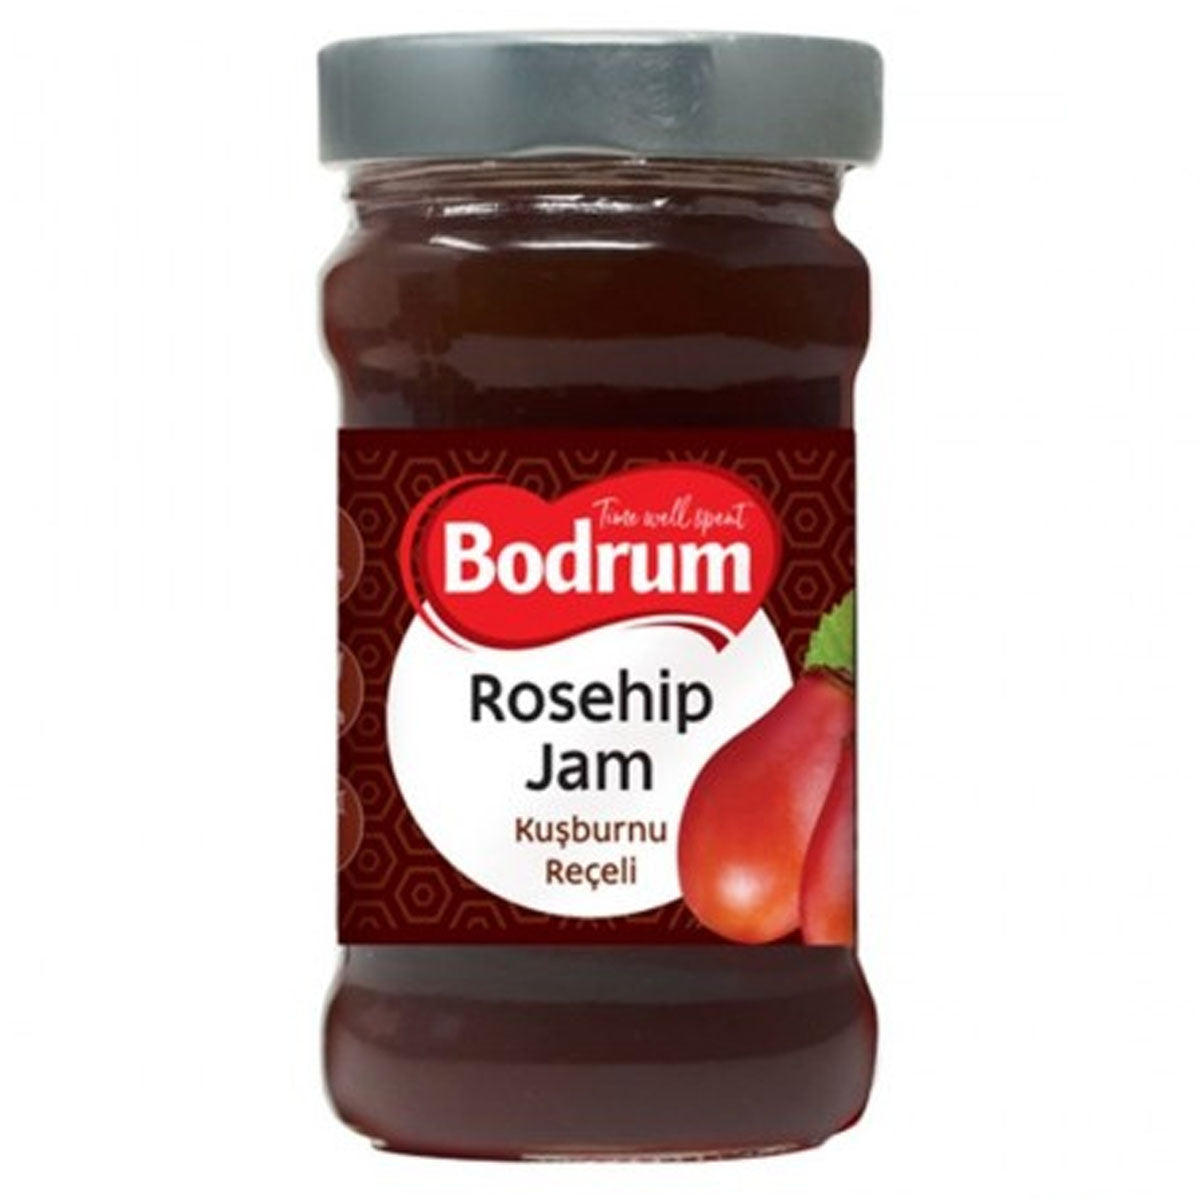 Bodrum - Rosehip Jam - 380g - Continental Food Store